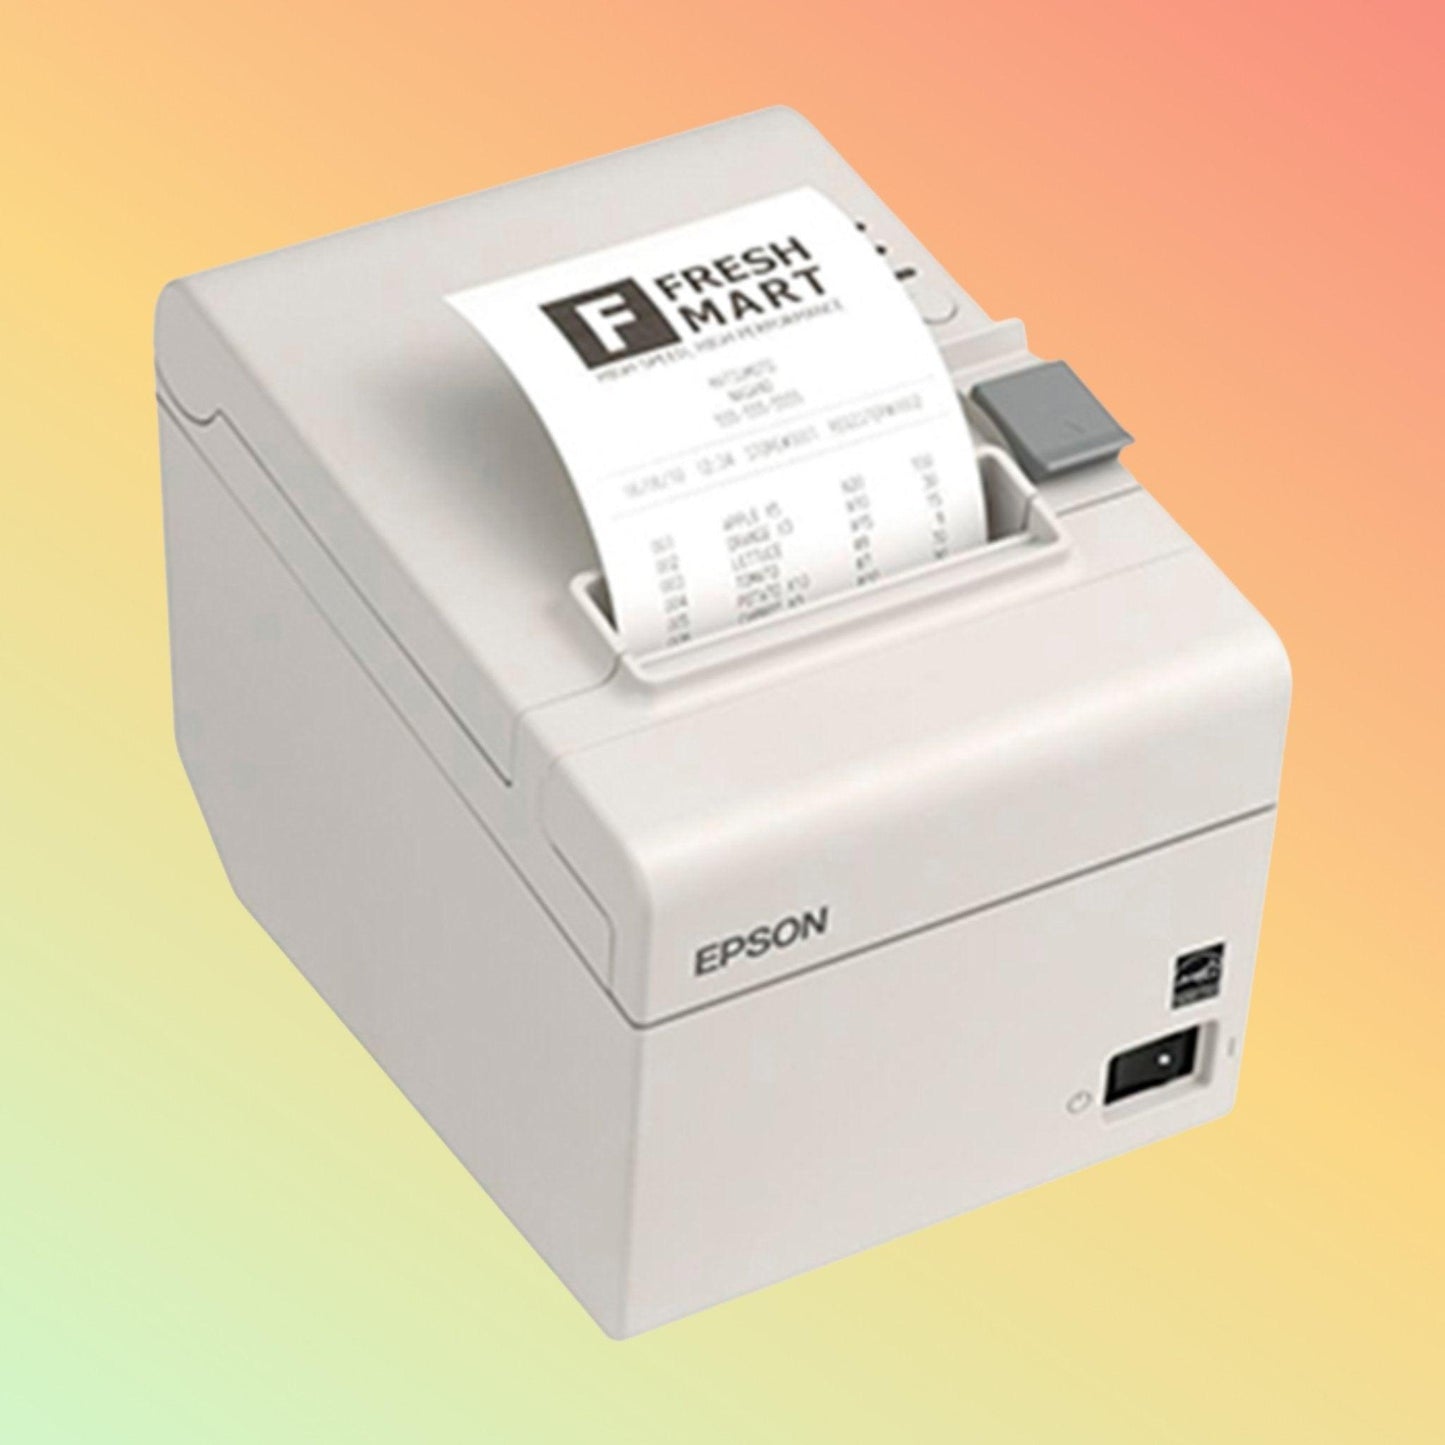 Epson TM-T20III (011) Thermal POS Printer: USB + Serial Connectivity